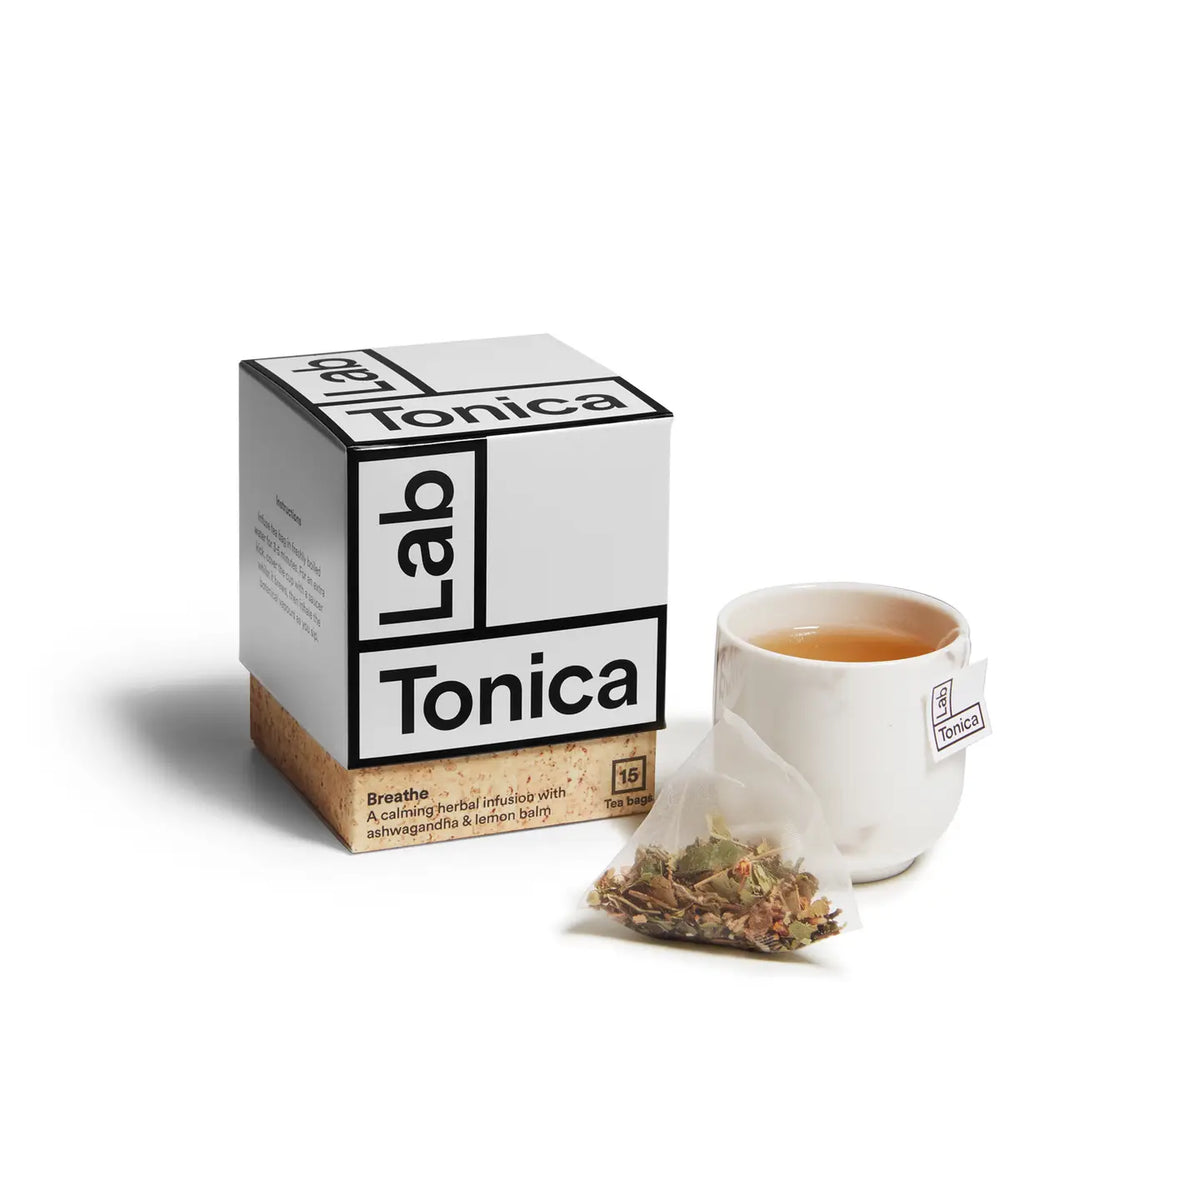 Optional Breathe minty herbal tea